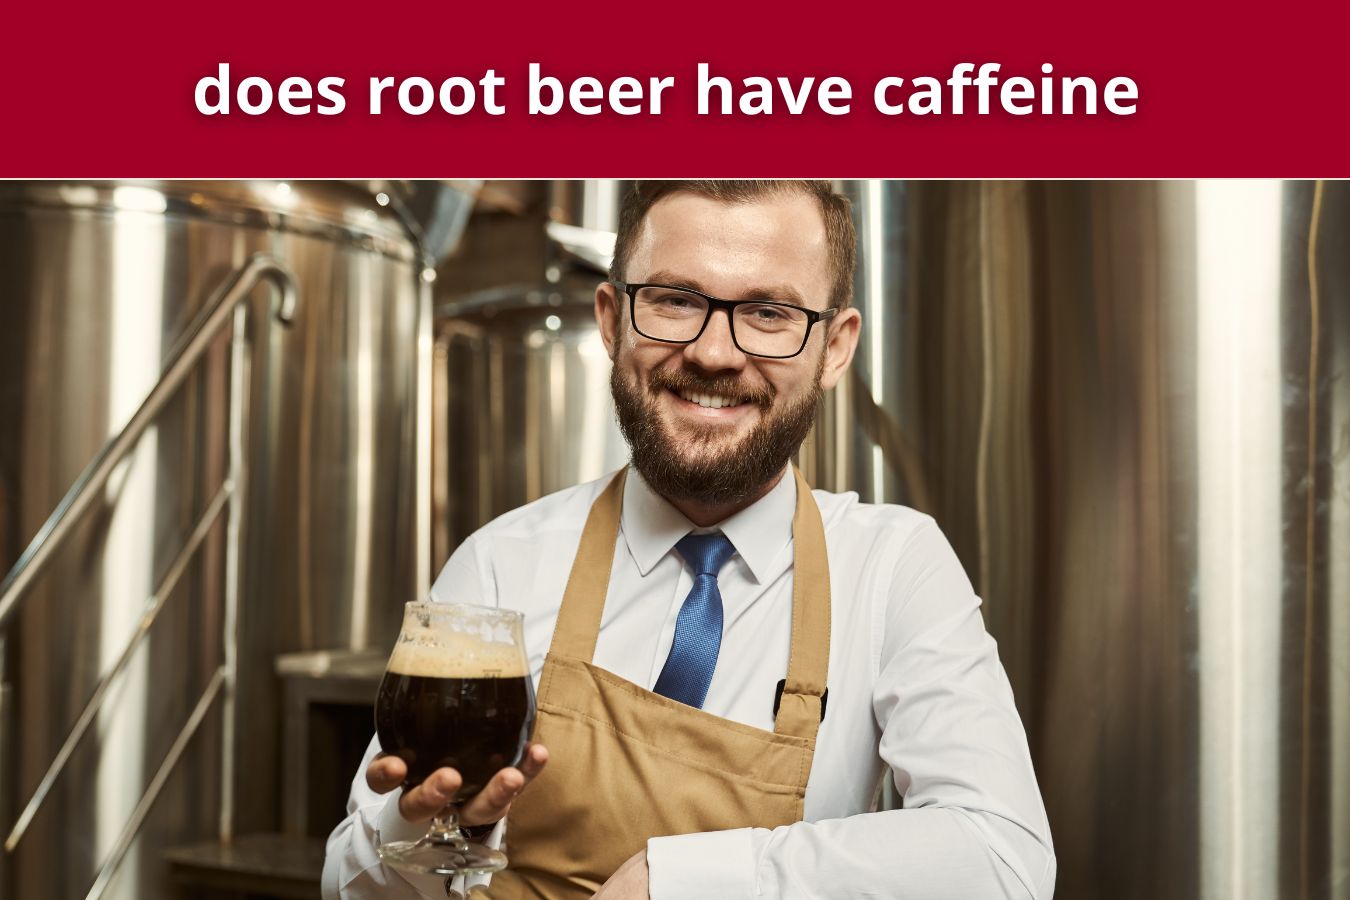 do root beer have caffeine